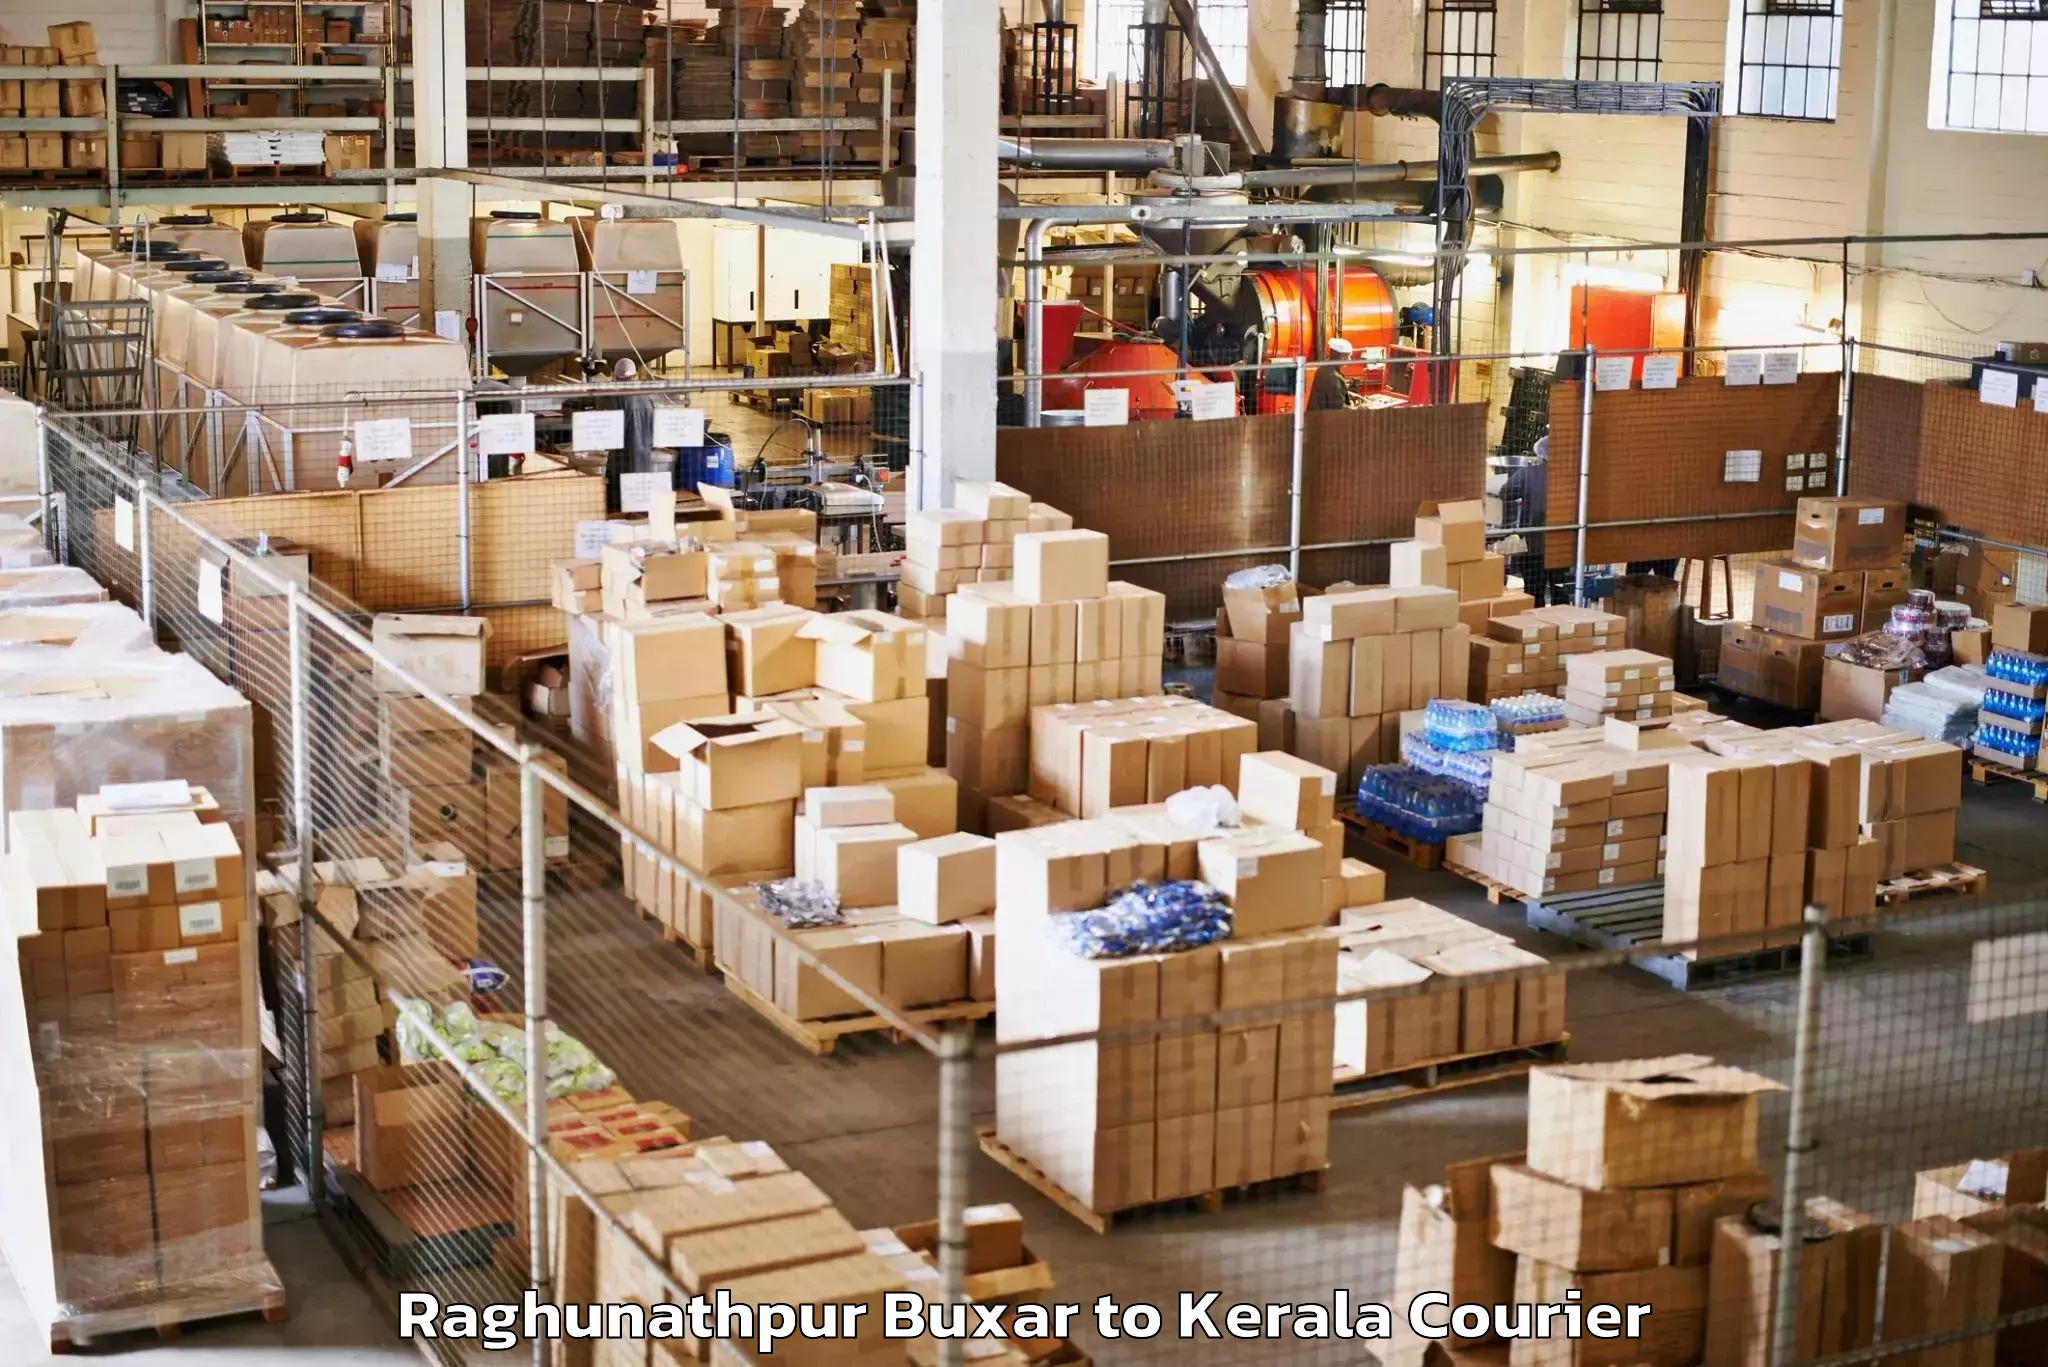 Luggage shipment specialists Raghunathpur Buxar to Nallepilly